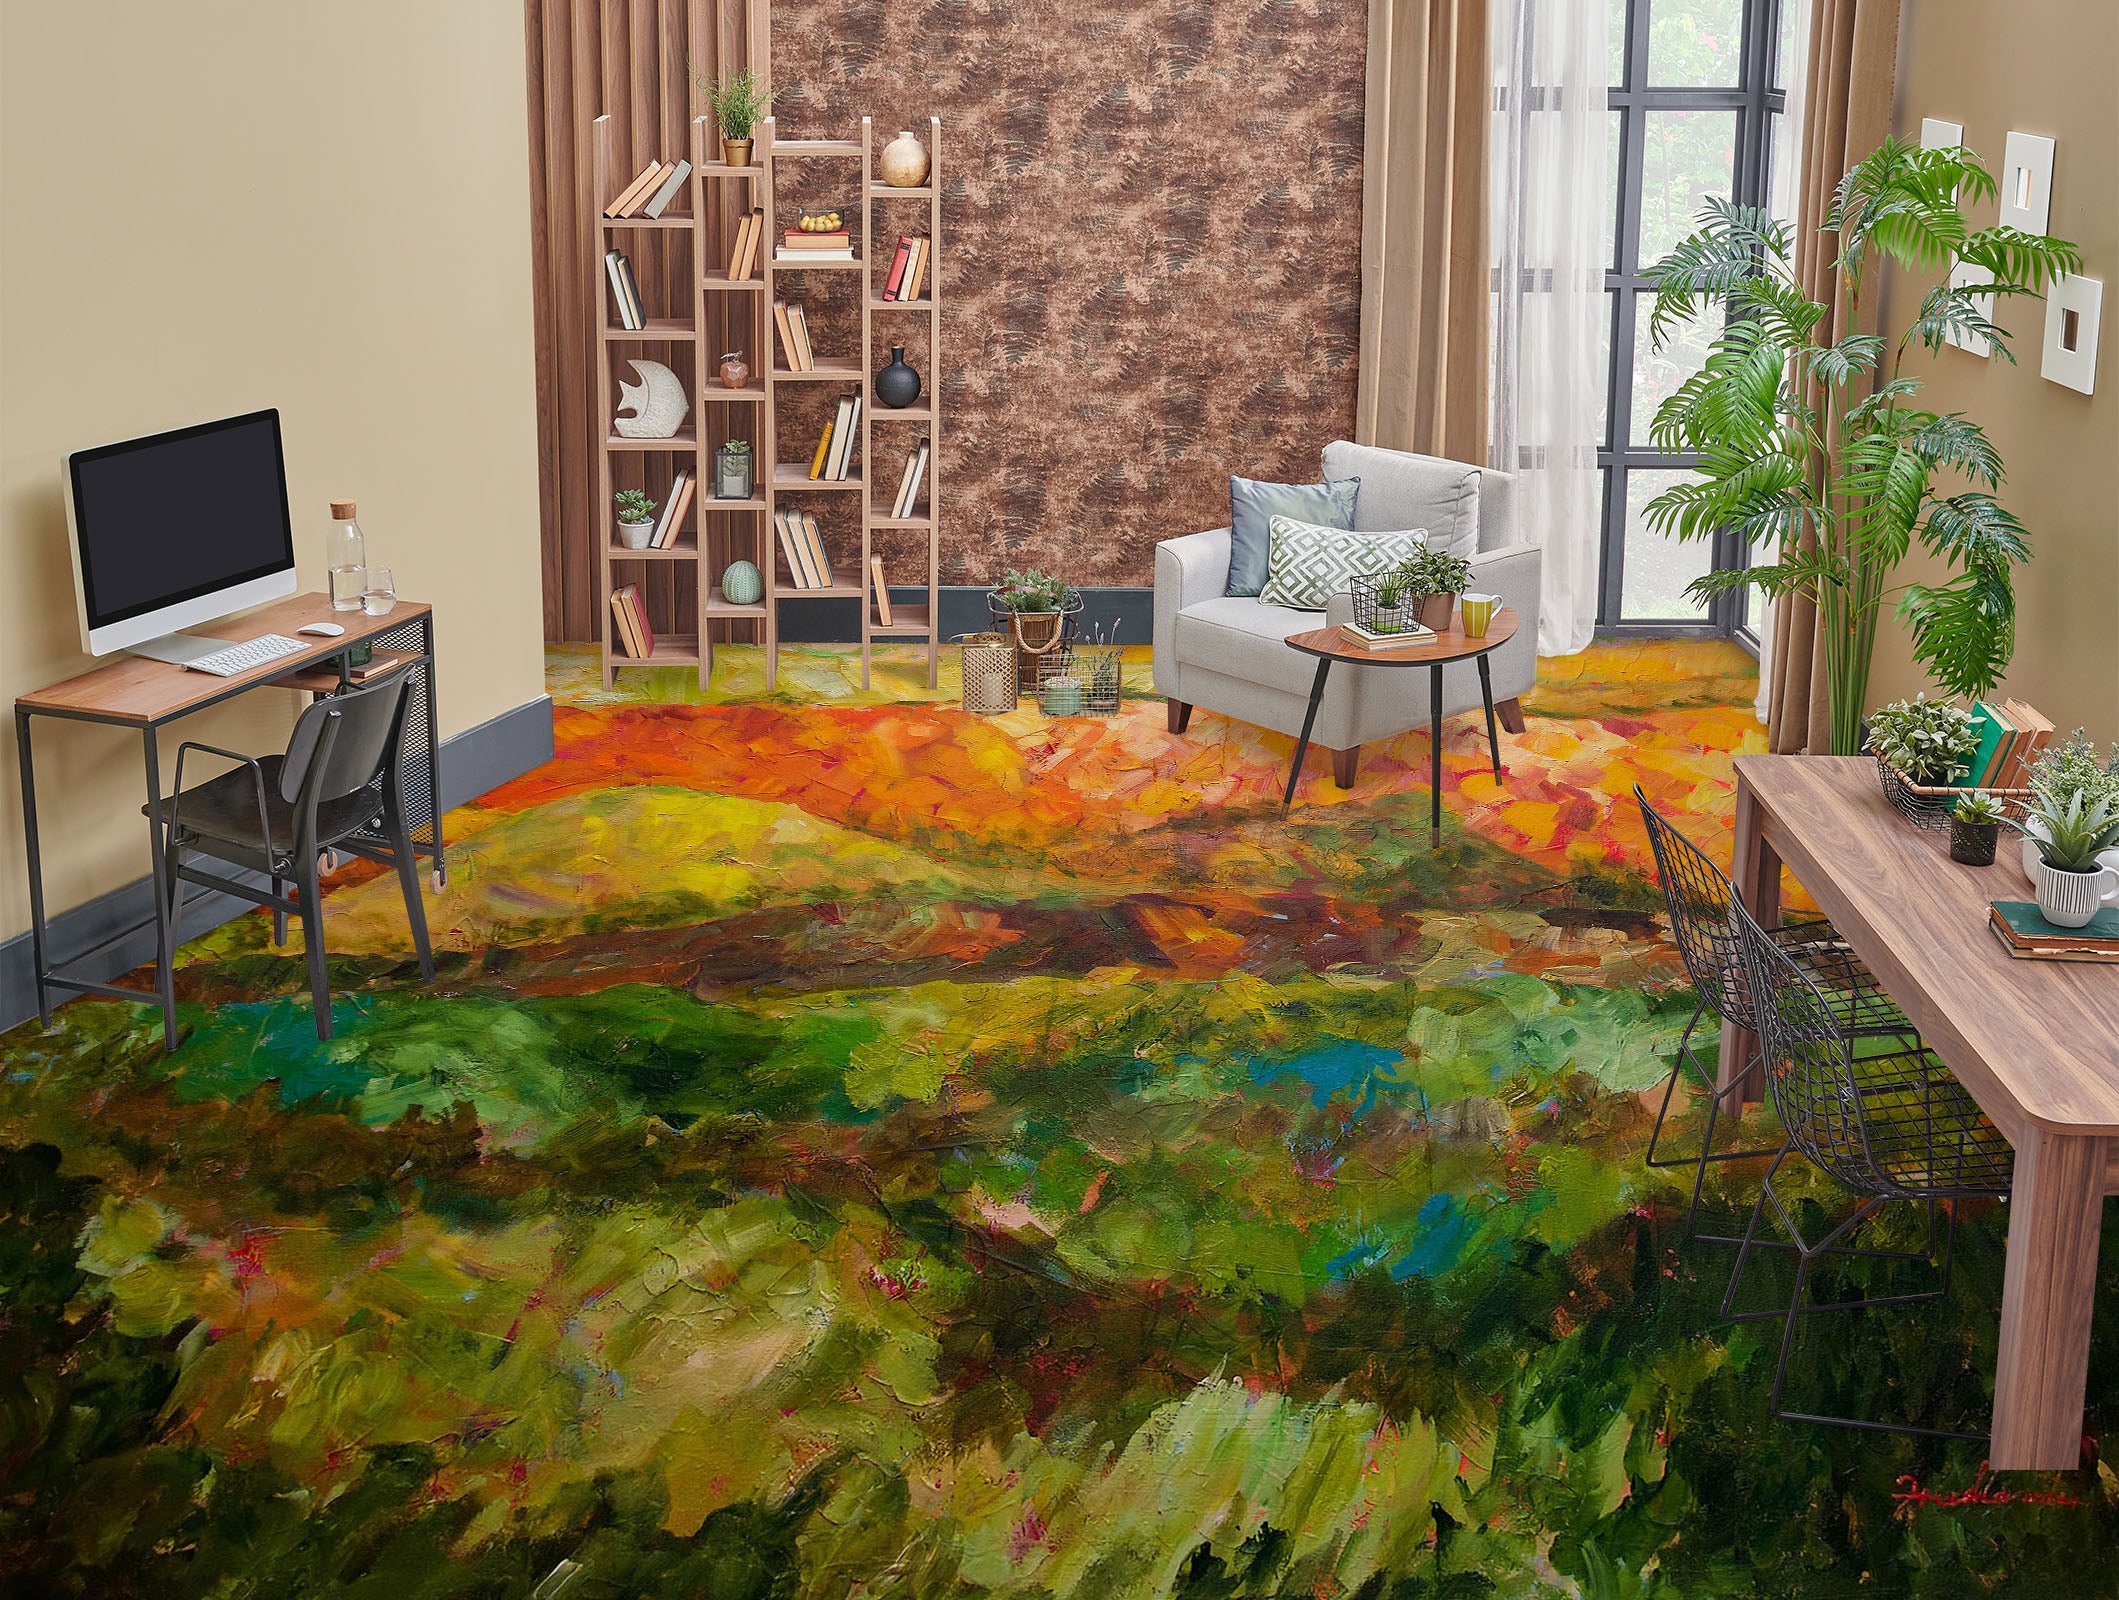 3D Grass Oil Painting 9934 Allan P. Friedlander Floor Mural  Wallpaper Murals Self-Adhesive Removable Print Epoxy